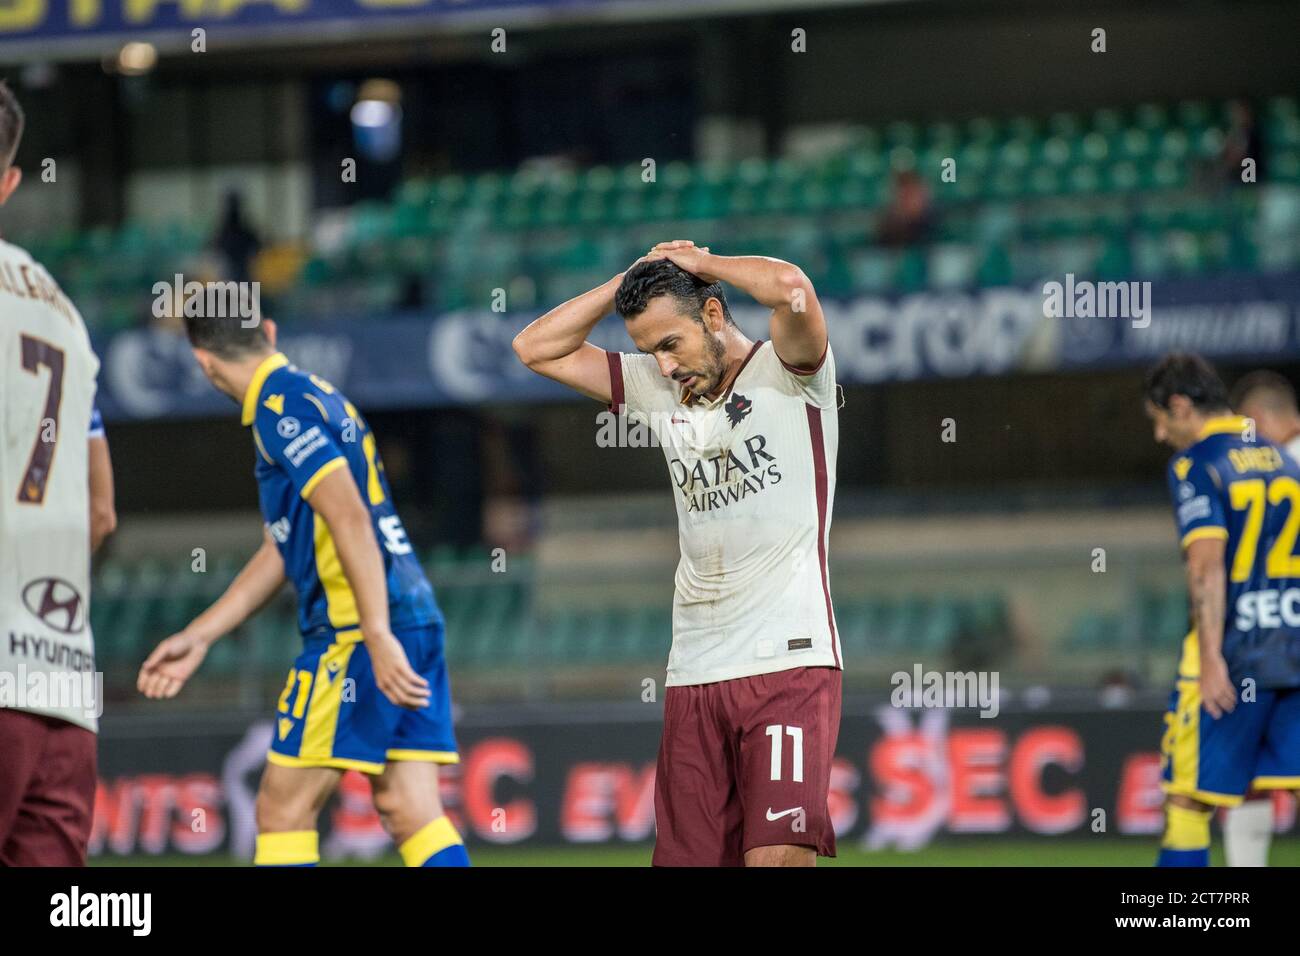 Pedro (AS Roma) during Hellas Verona vs Roma, italian Serie A soccer match, Verona, Italy, 19 Sep 2020 Stock Photo